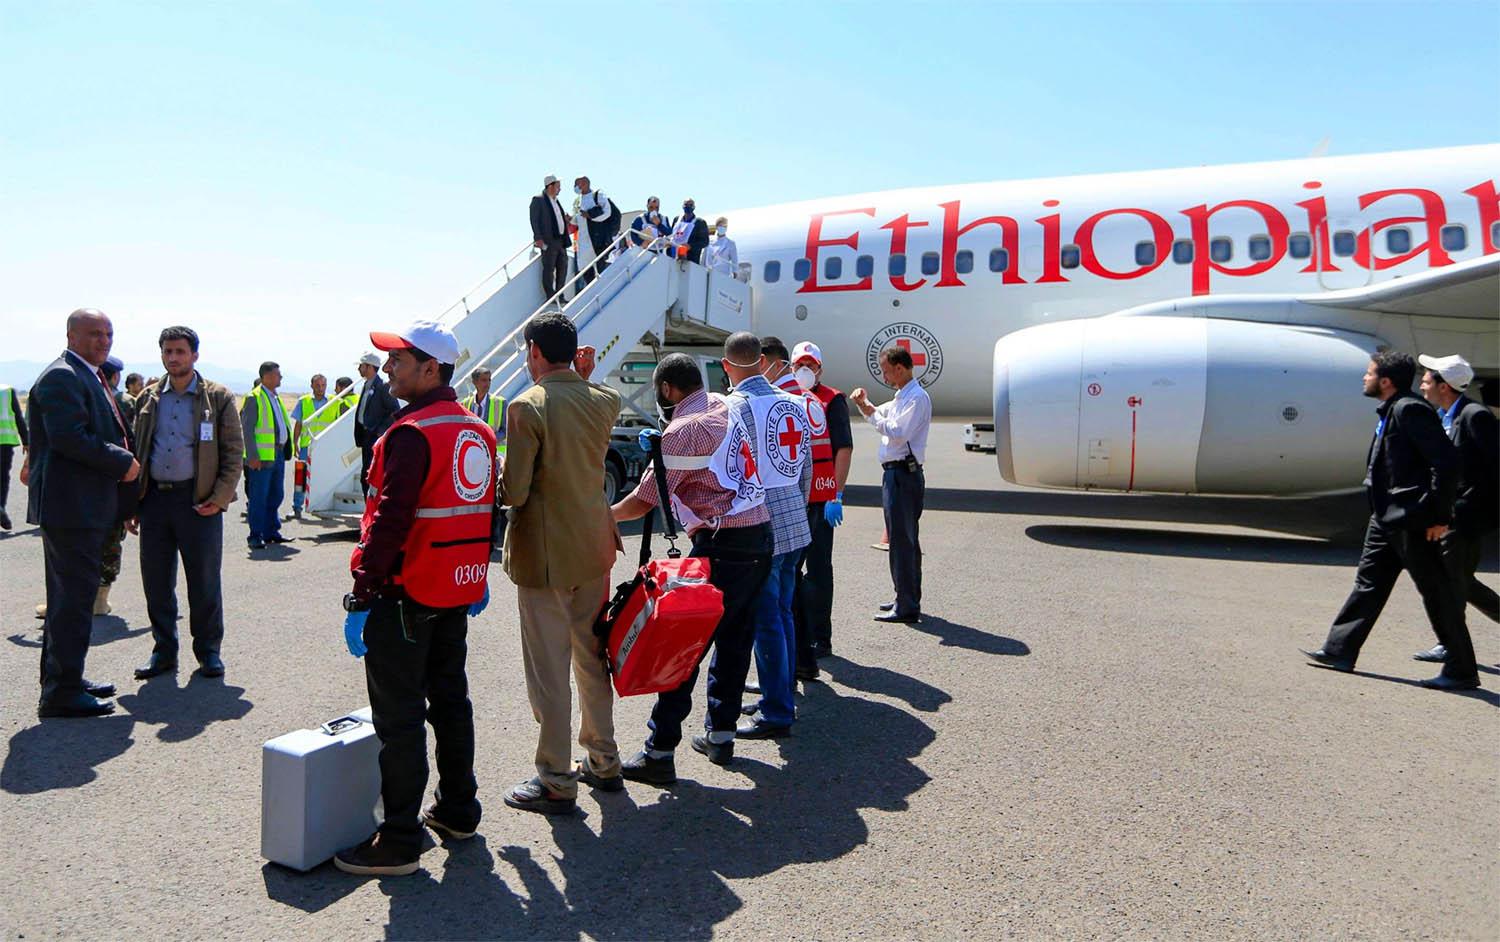 IOM has transferred more than 600 migrants to Ethiopia on three flights so far this year